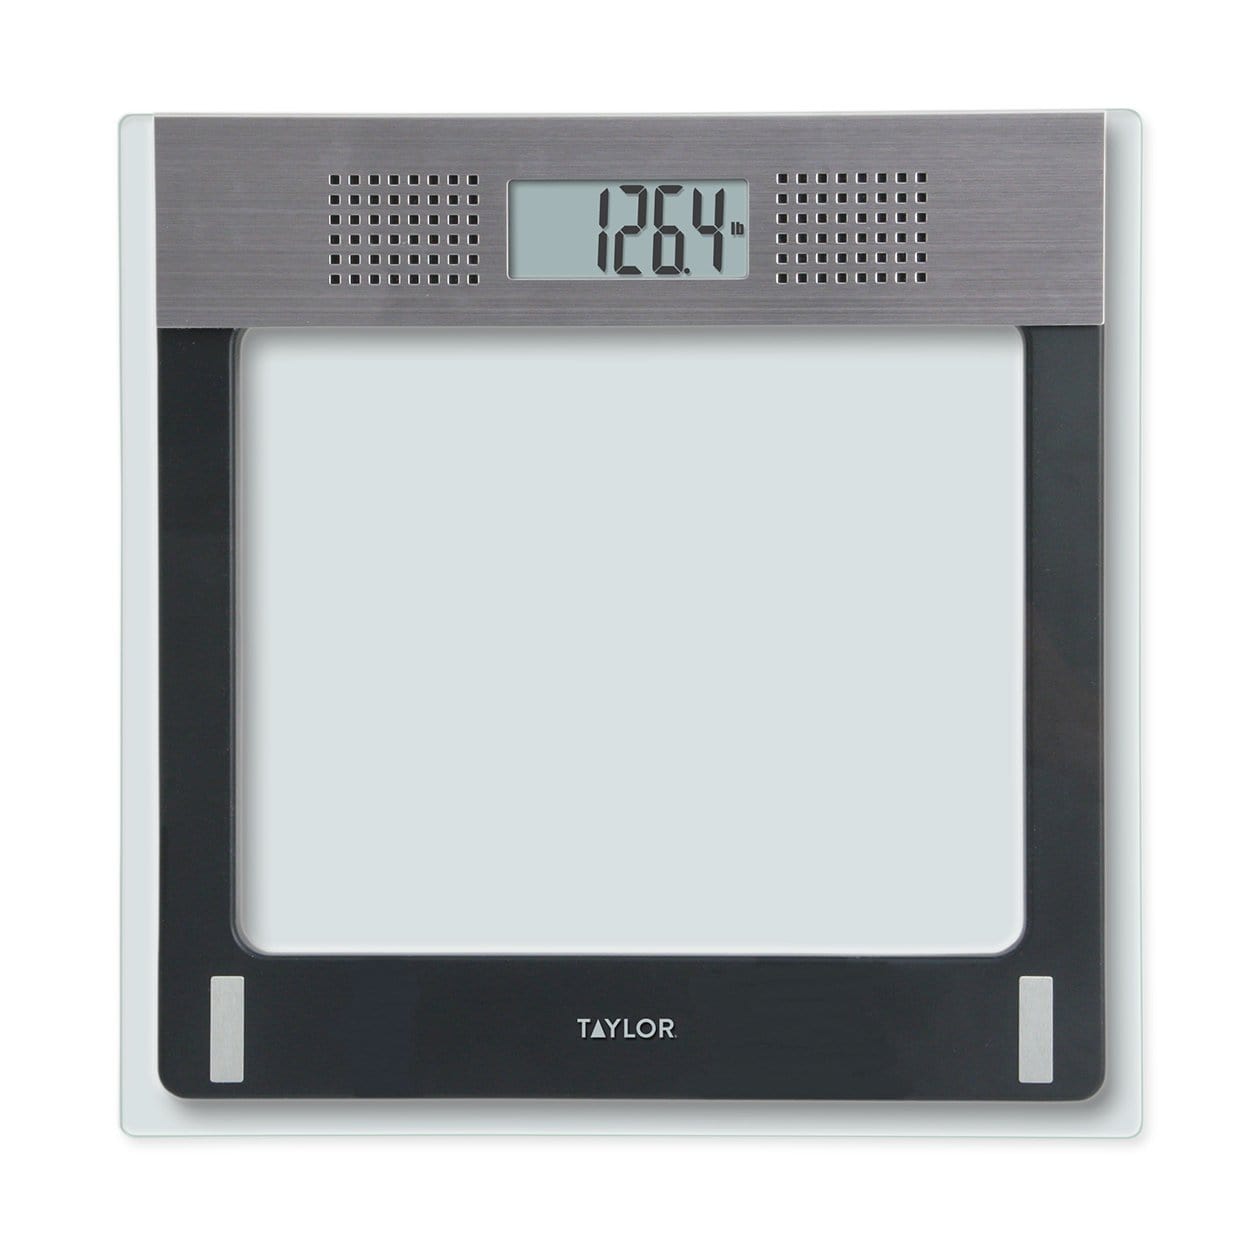 Taylor Digital Glass Bathroom Scale X-Large Display 440 LBS